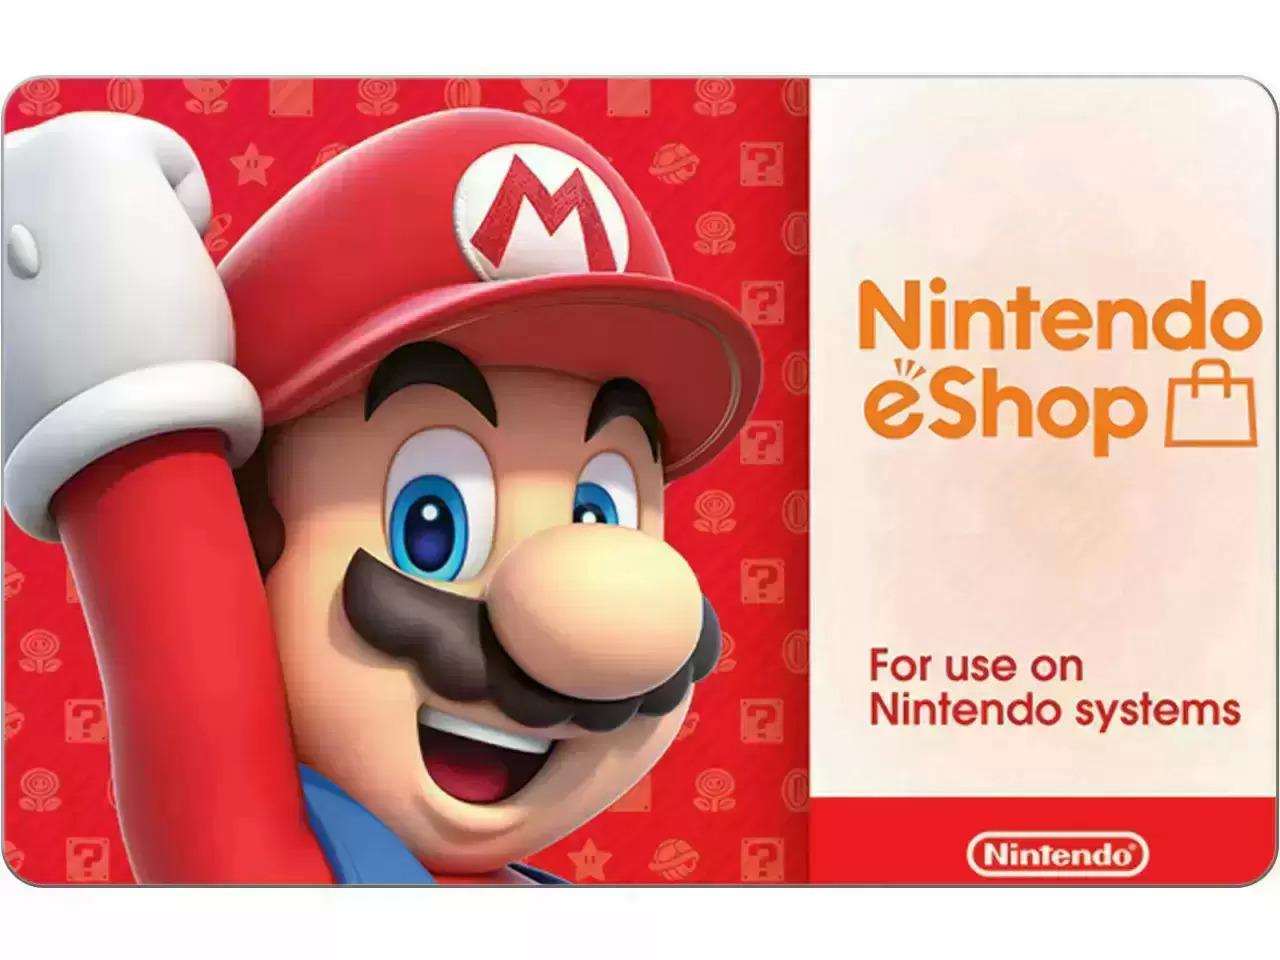 Nintendo eShop Discounted Gift Card 10% Off